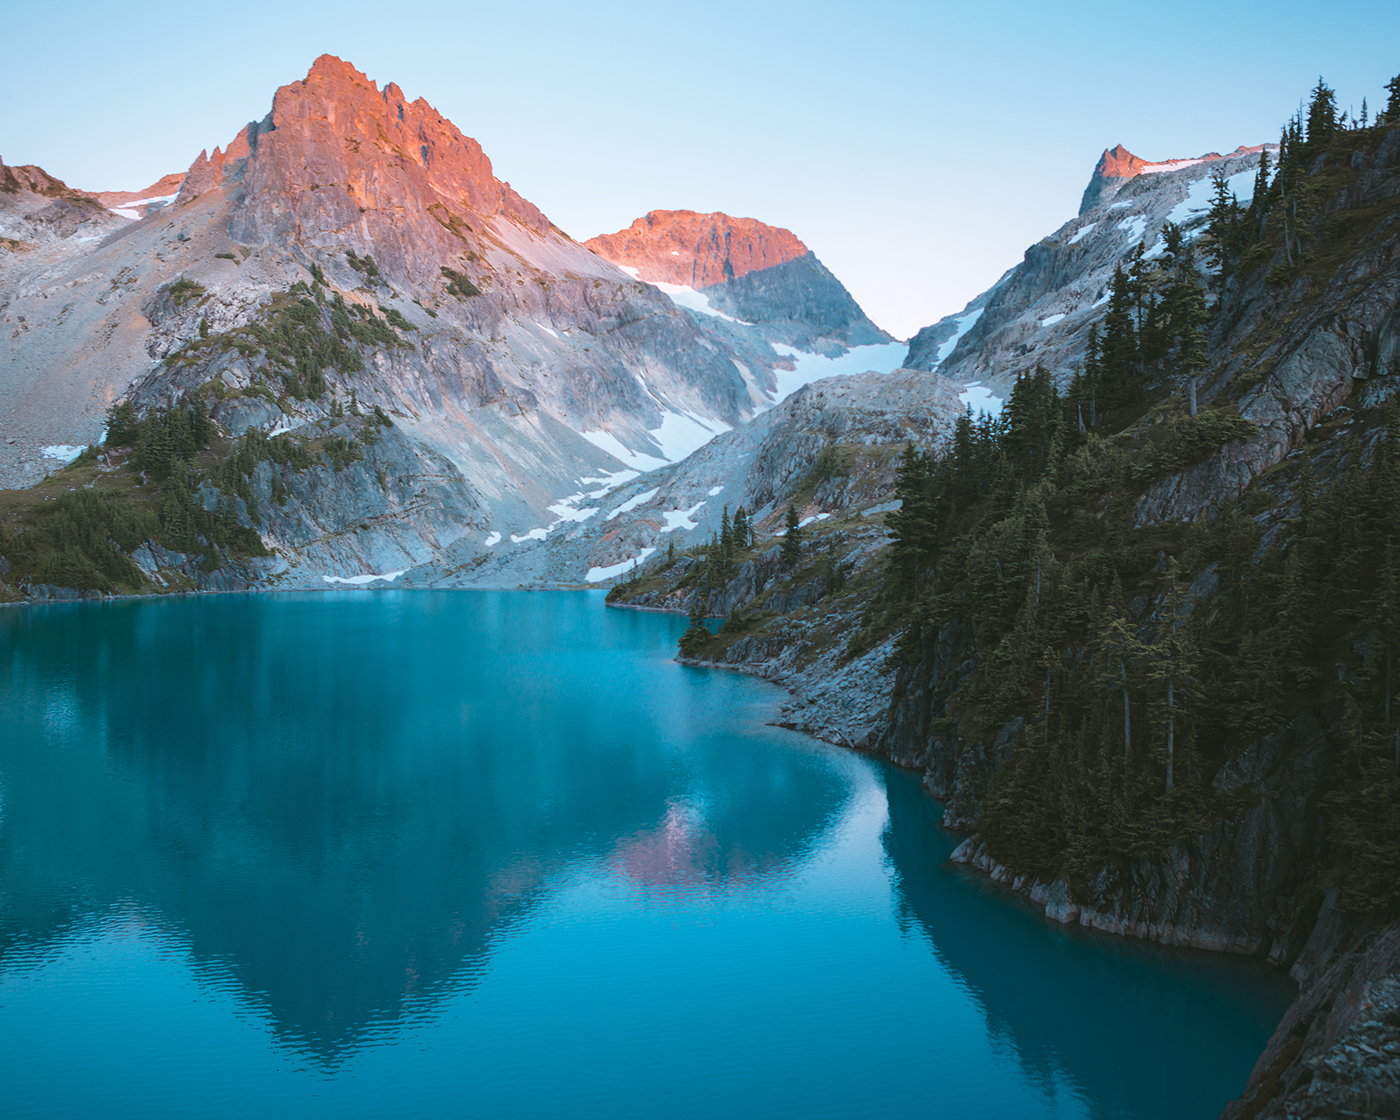 Alpine Lakes Wilderness, WA on Behance